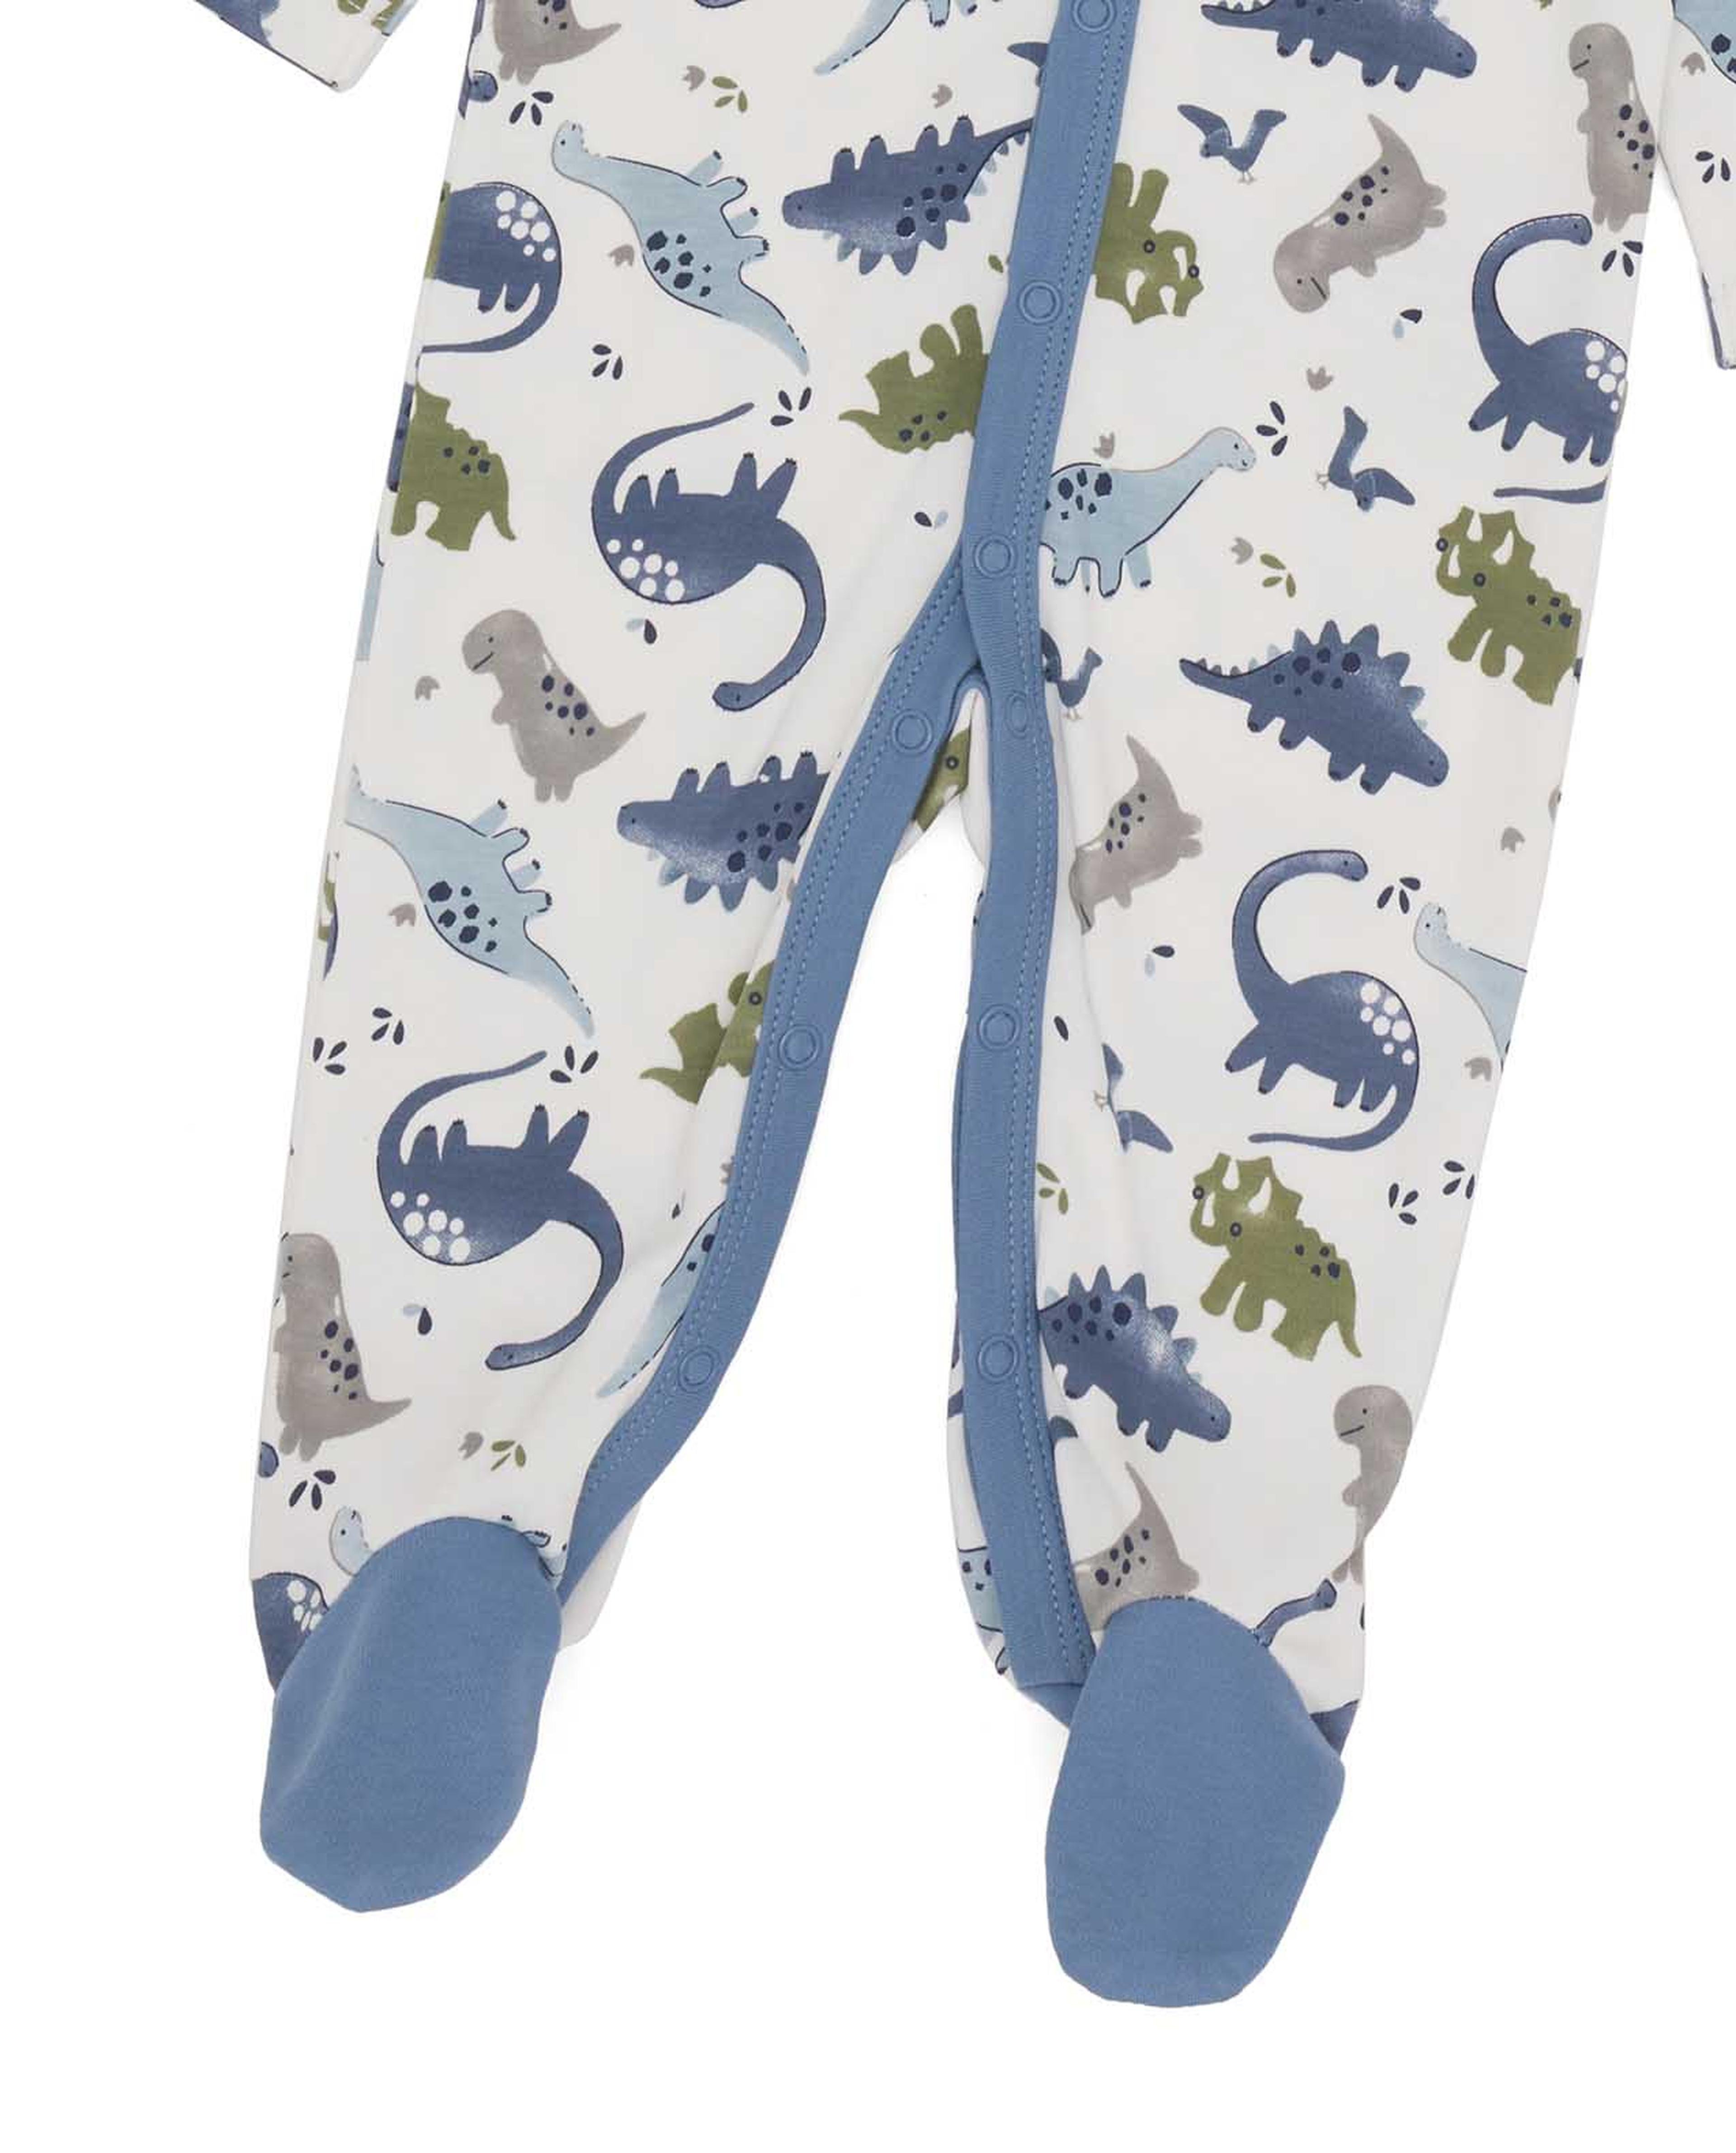 Dino Print Footed Sleepsuit